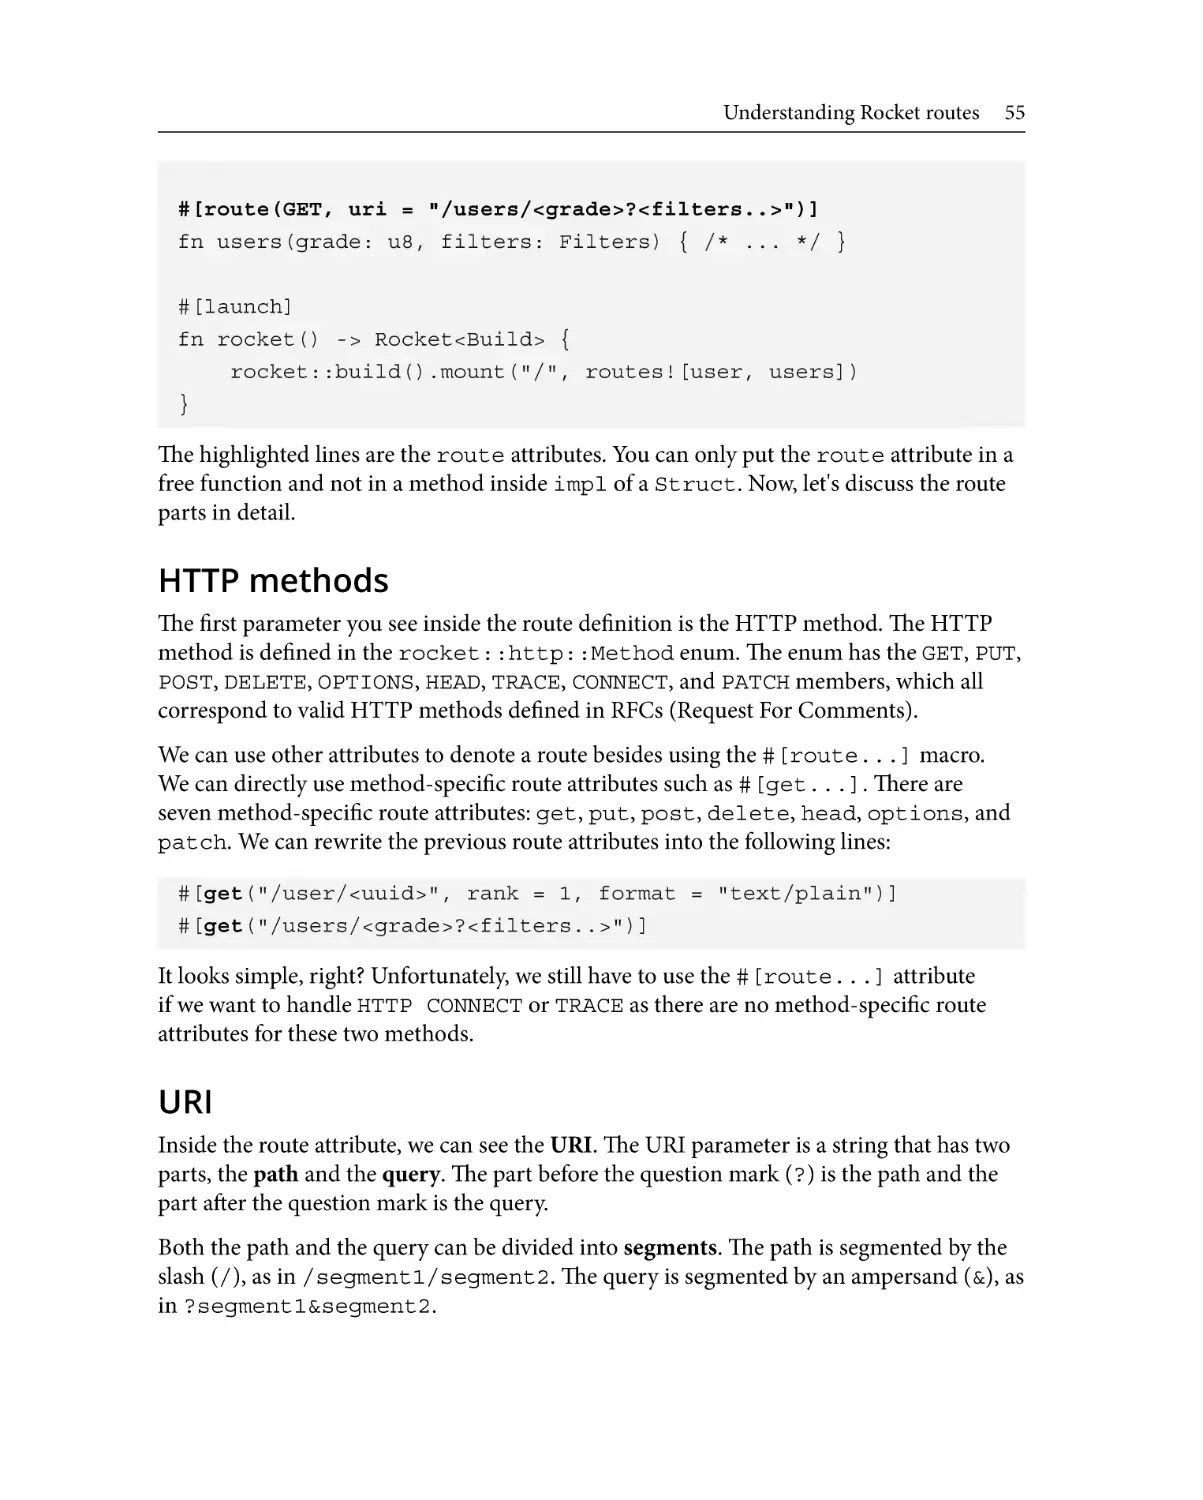 HTTP methods
URI